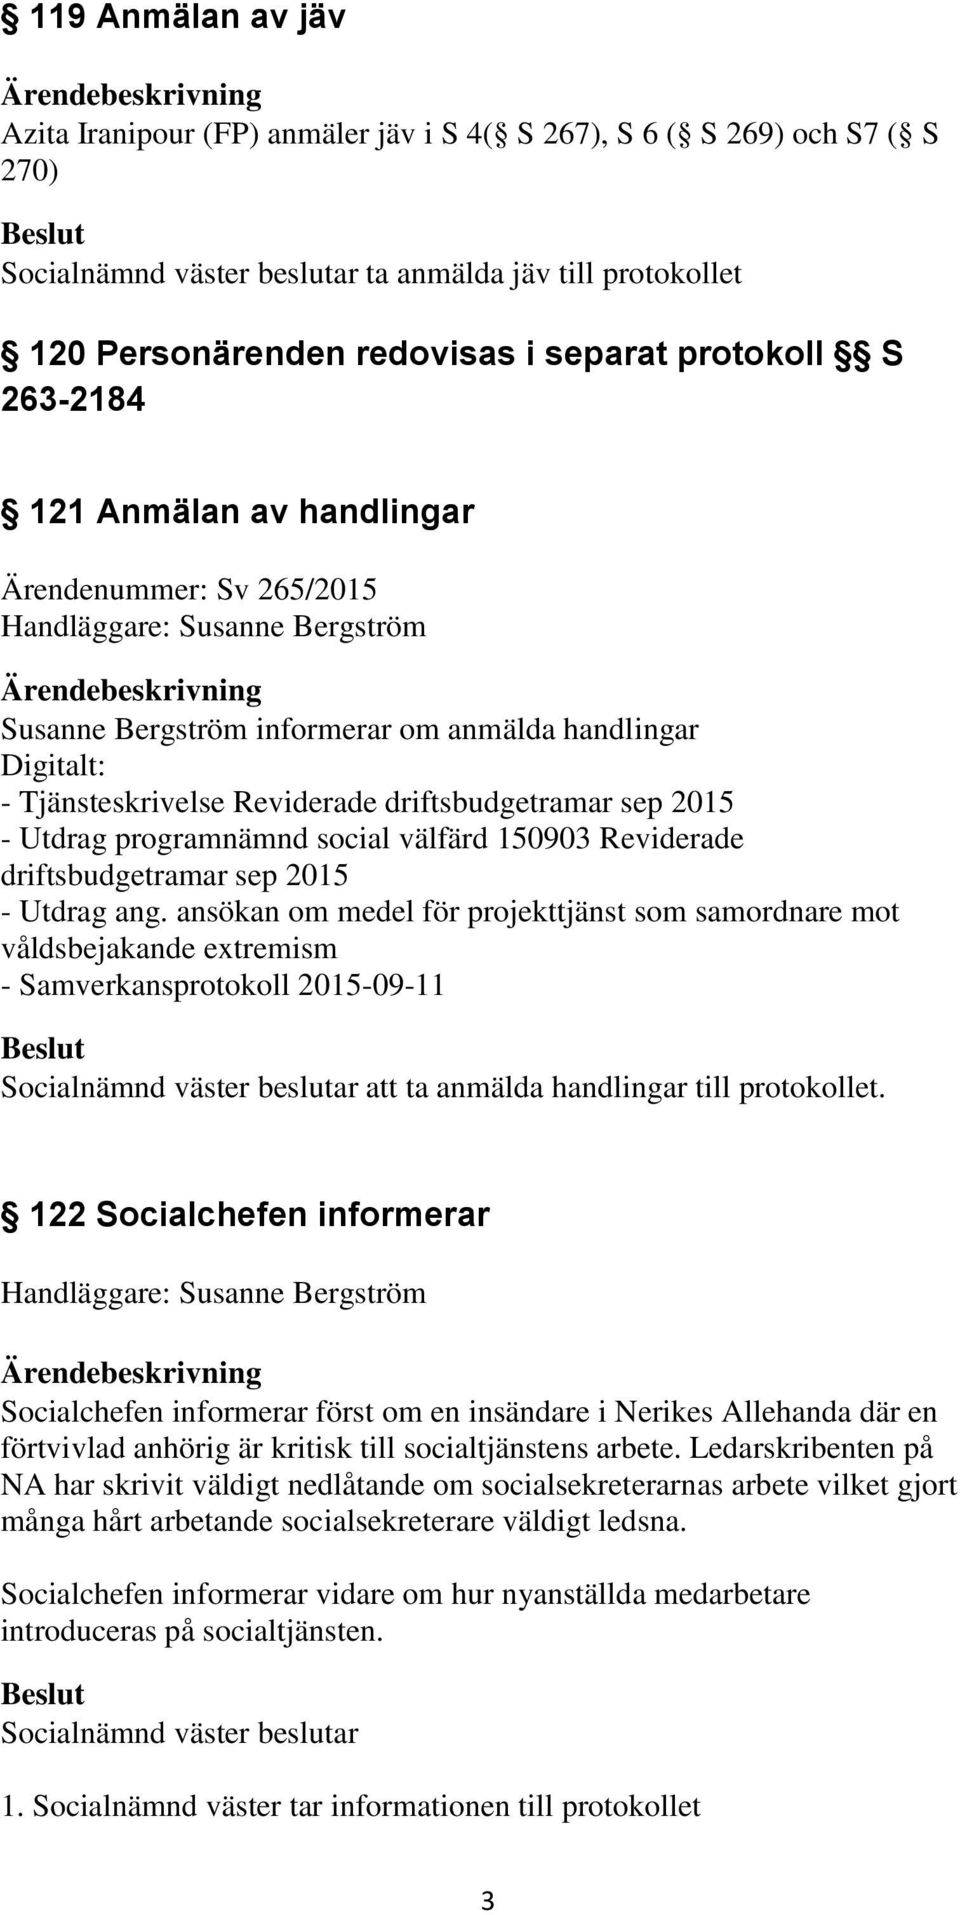 driftsbudgetramar sep 2015 - Utdrag programnämnd social välfärd 150903 Reviderade driftsbudgetramar sep 2015 - Utdrag ang.